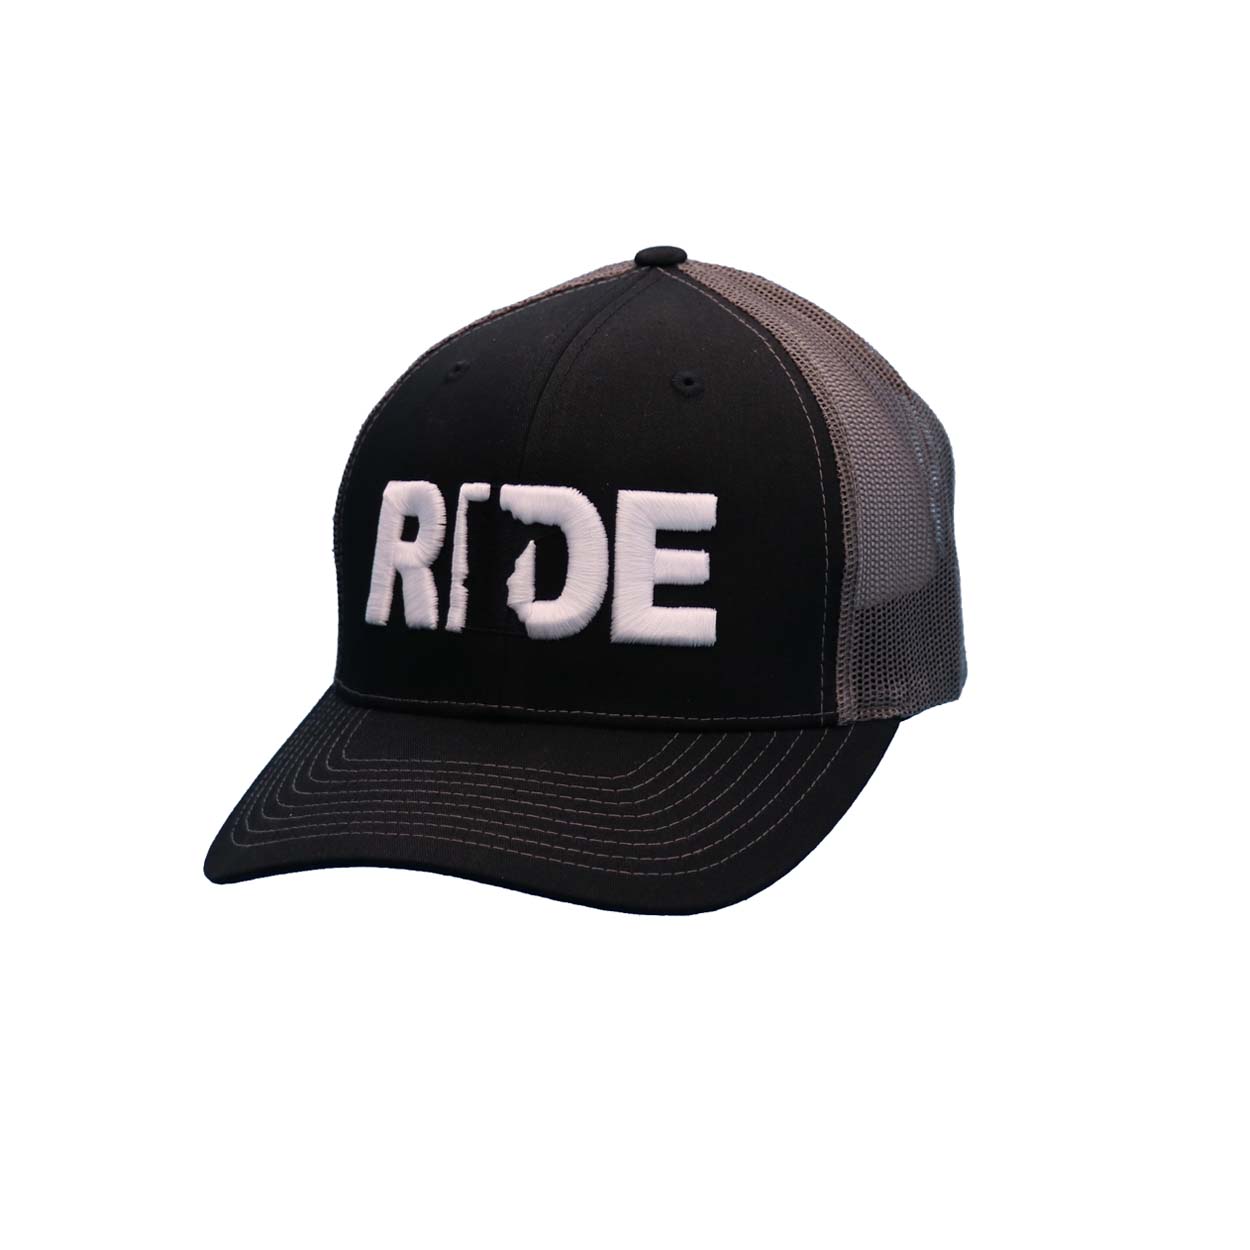 Ride Minnesota Classic Embroidered Snapback Trucker Hat Black/Gray